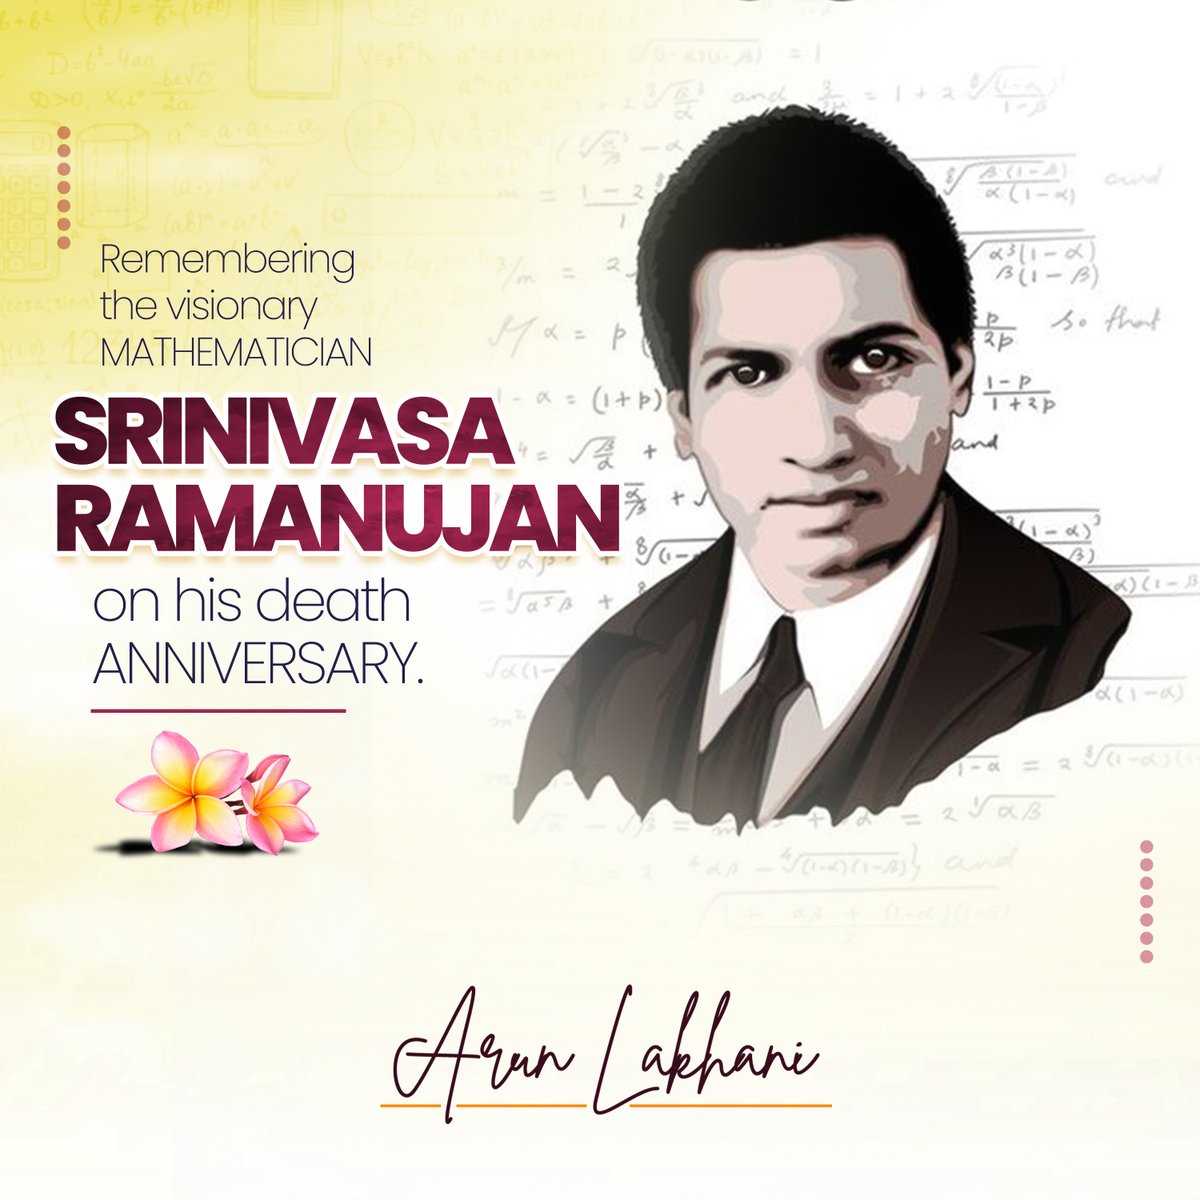 Remembering the visionary mathematician, Srinivasa Ramanujan, on his death anniversary. His brilliance continues to inspire mathematicians today.

#SrinivasaRamanujan #MathHistory